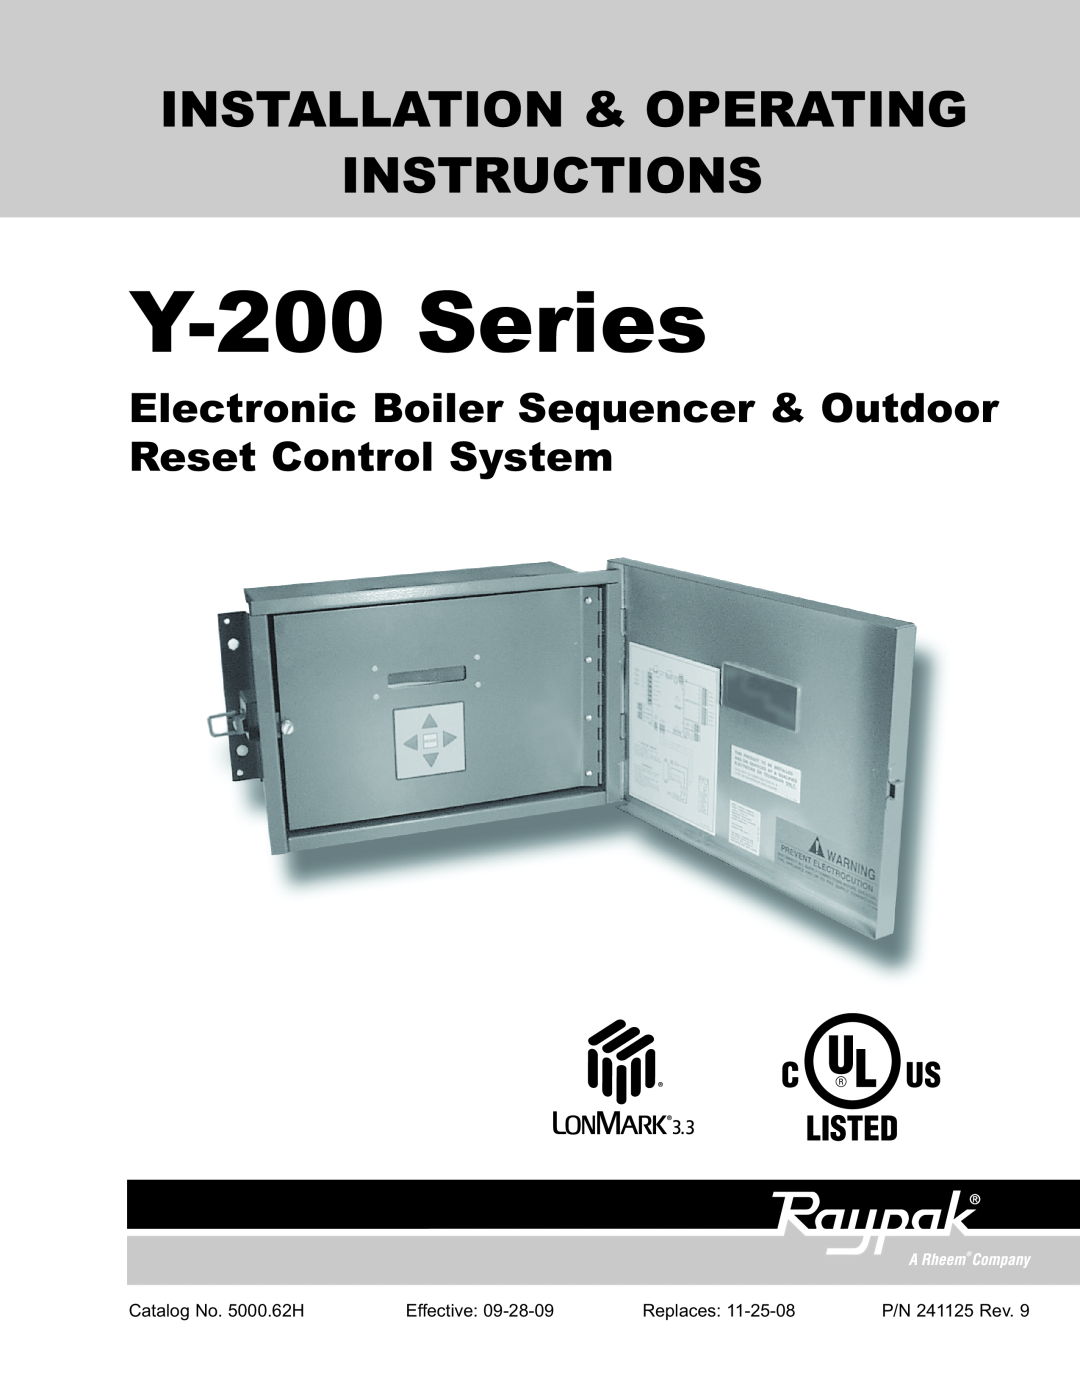 Raypak manual Y-200Series, Installation & Operating Instructions 